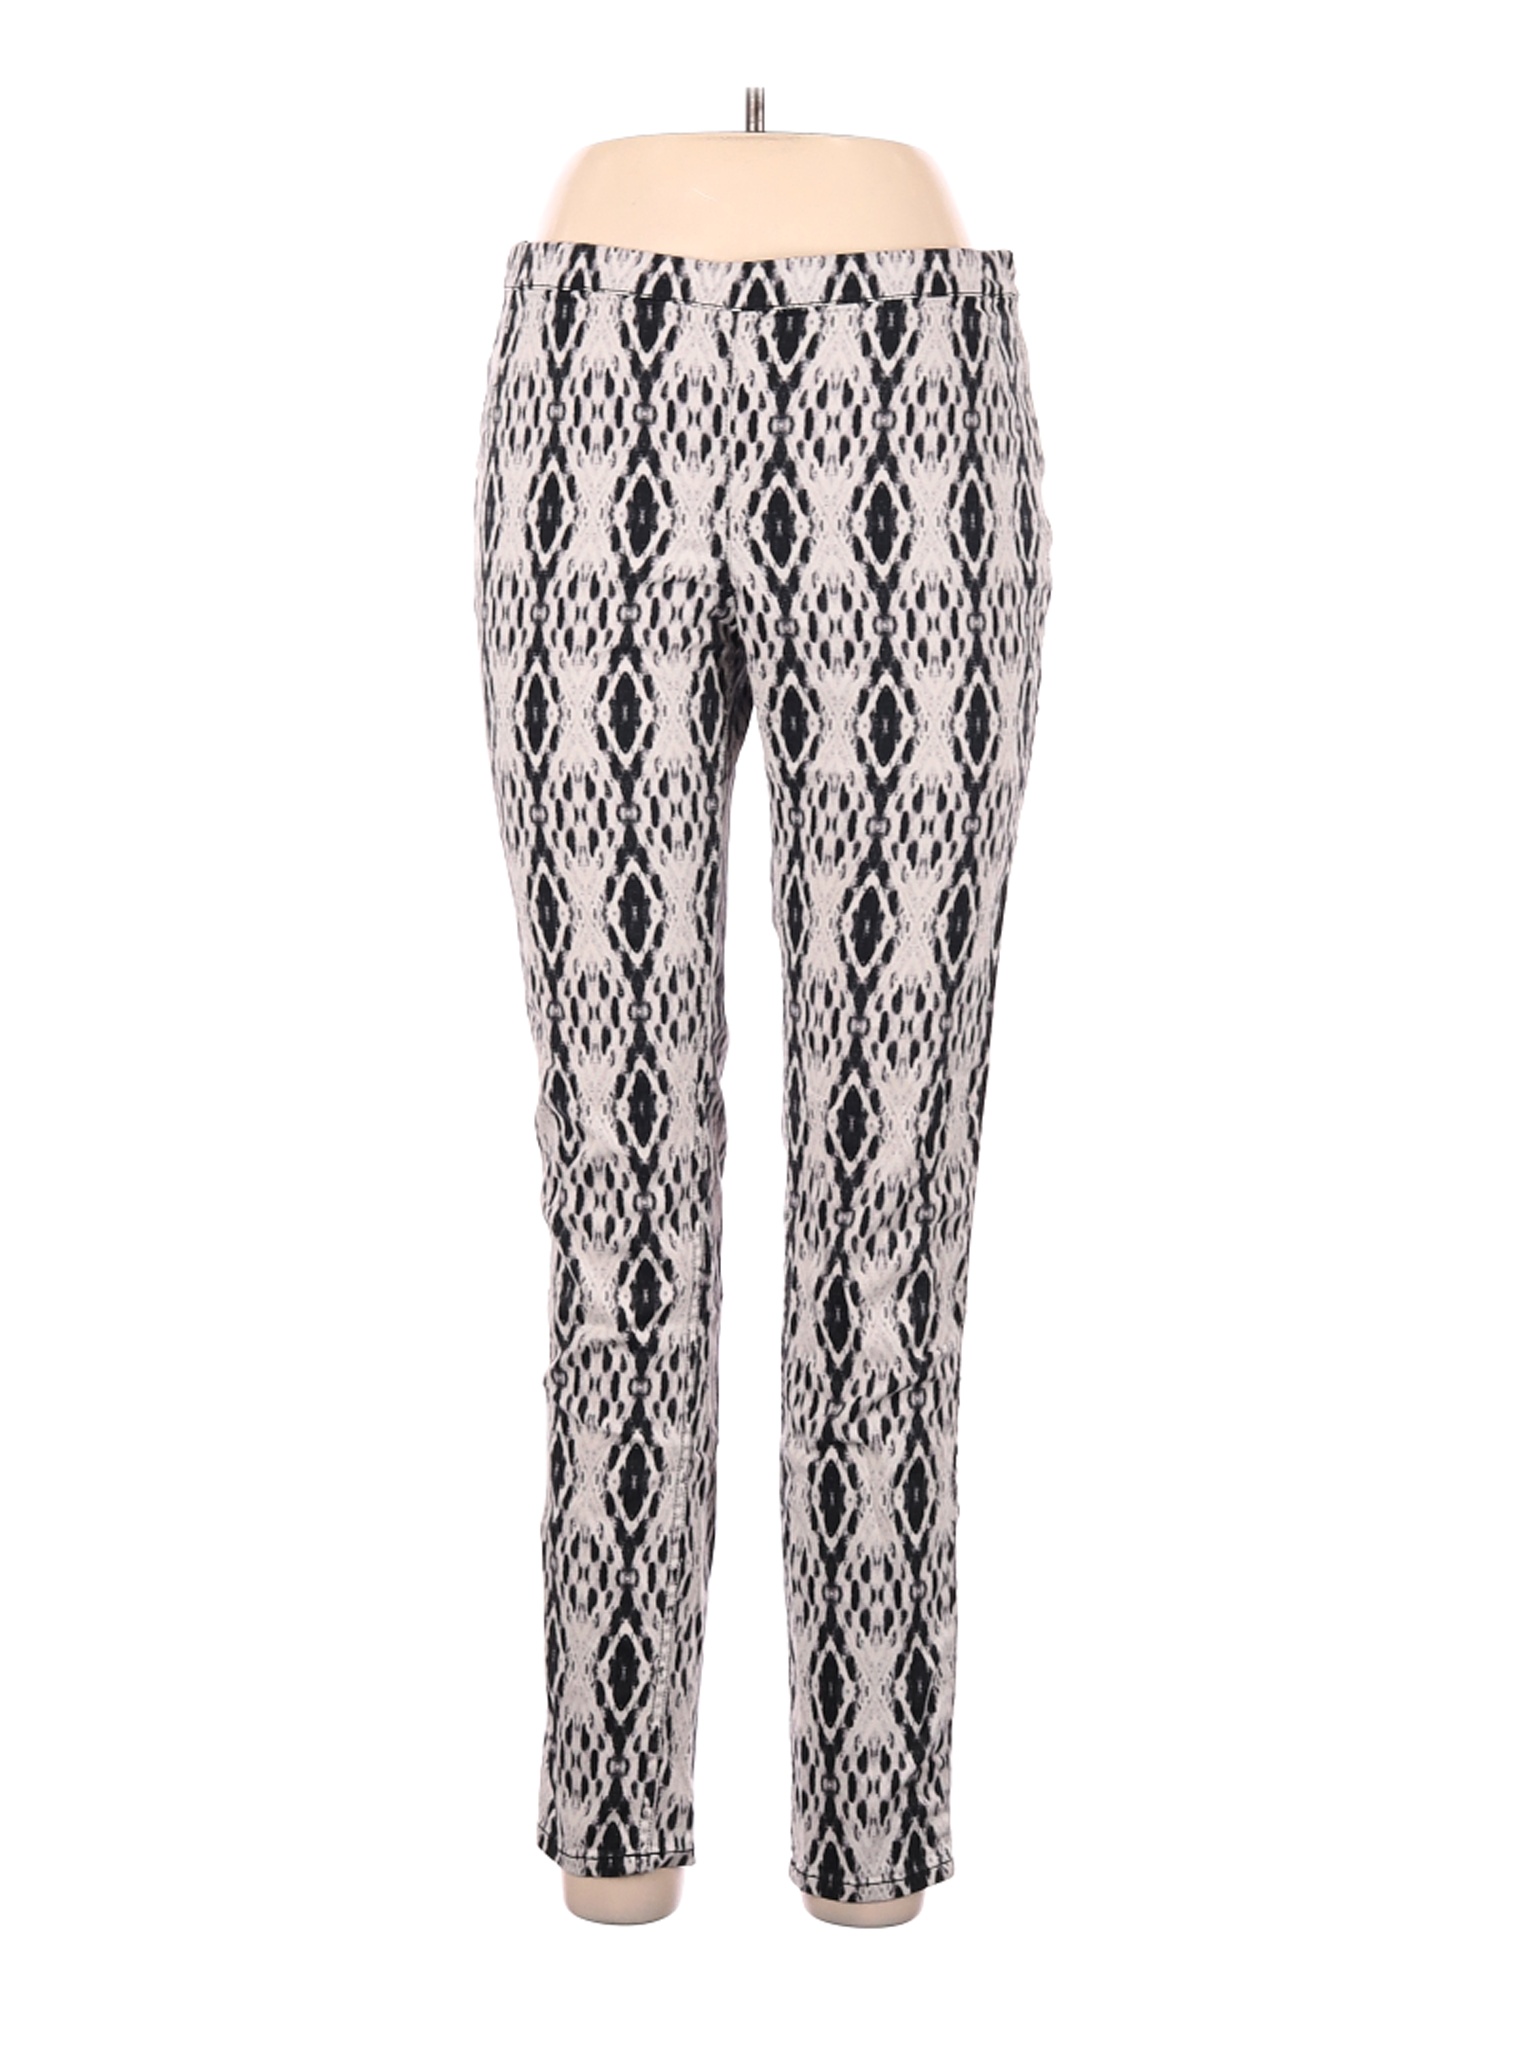 H&M Women Black Casual Pants 12 | eBay